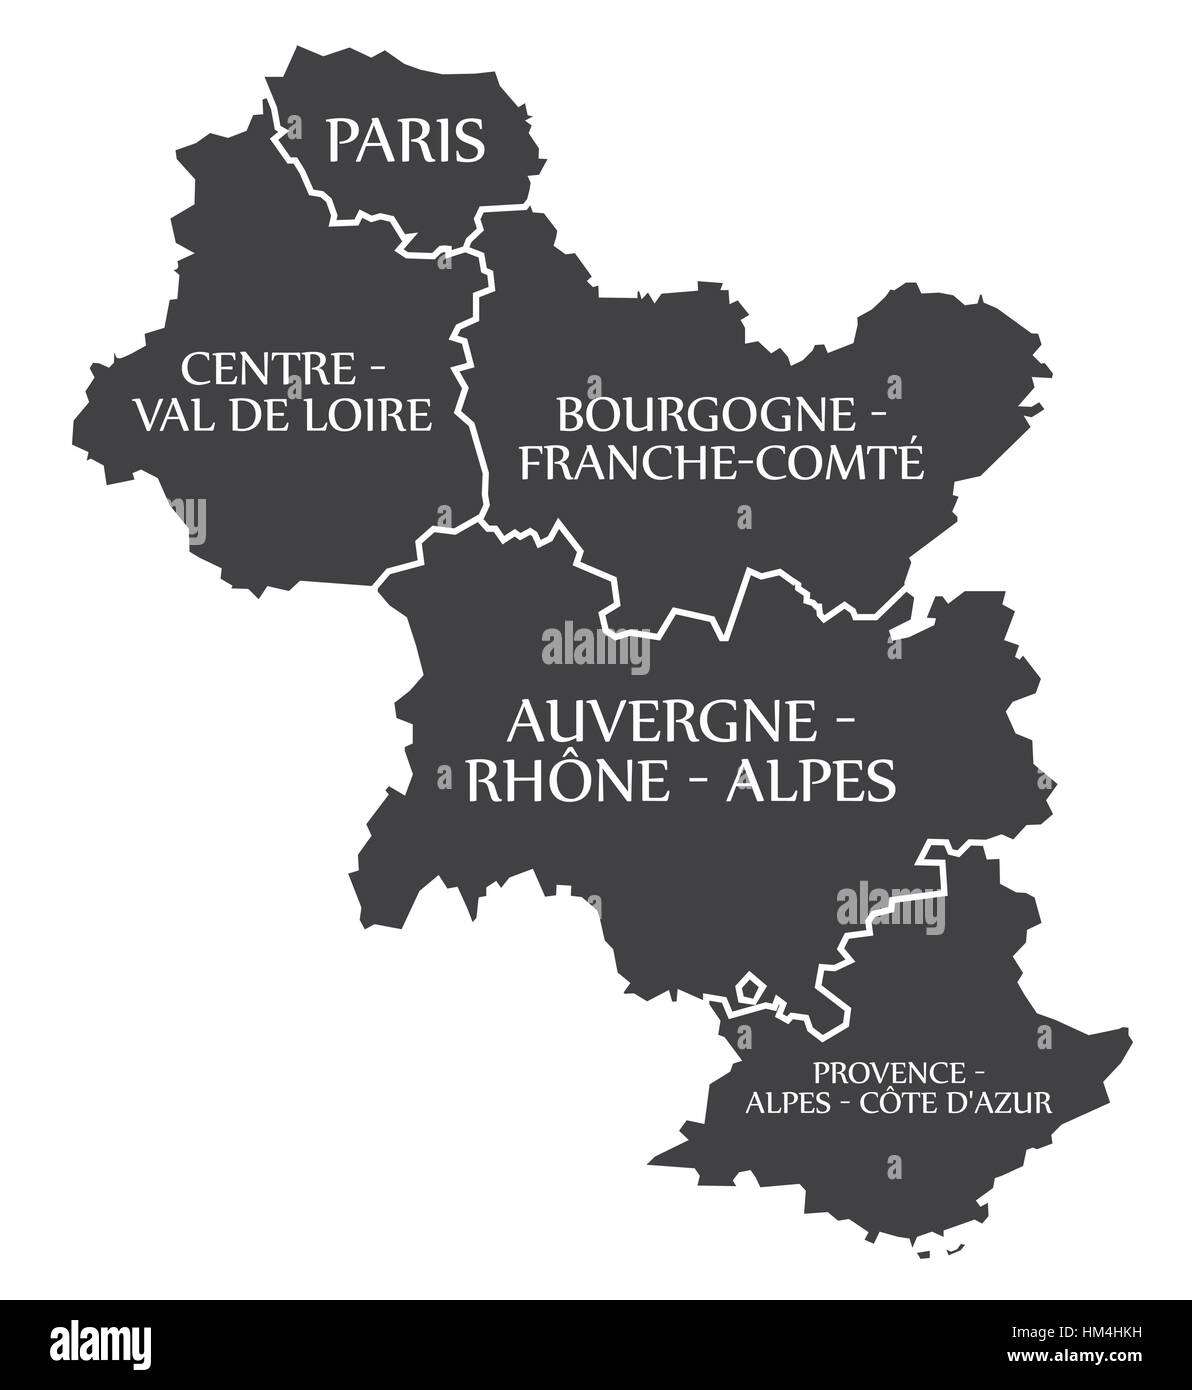 Paris - Centre - Bourgogne - Auvergne - Provence Map France illustration Stock Vector